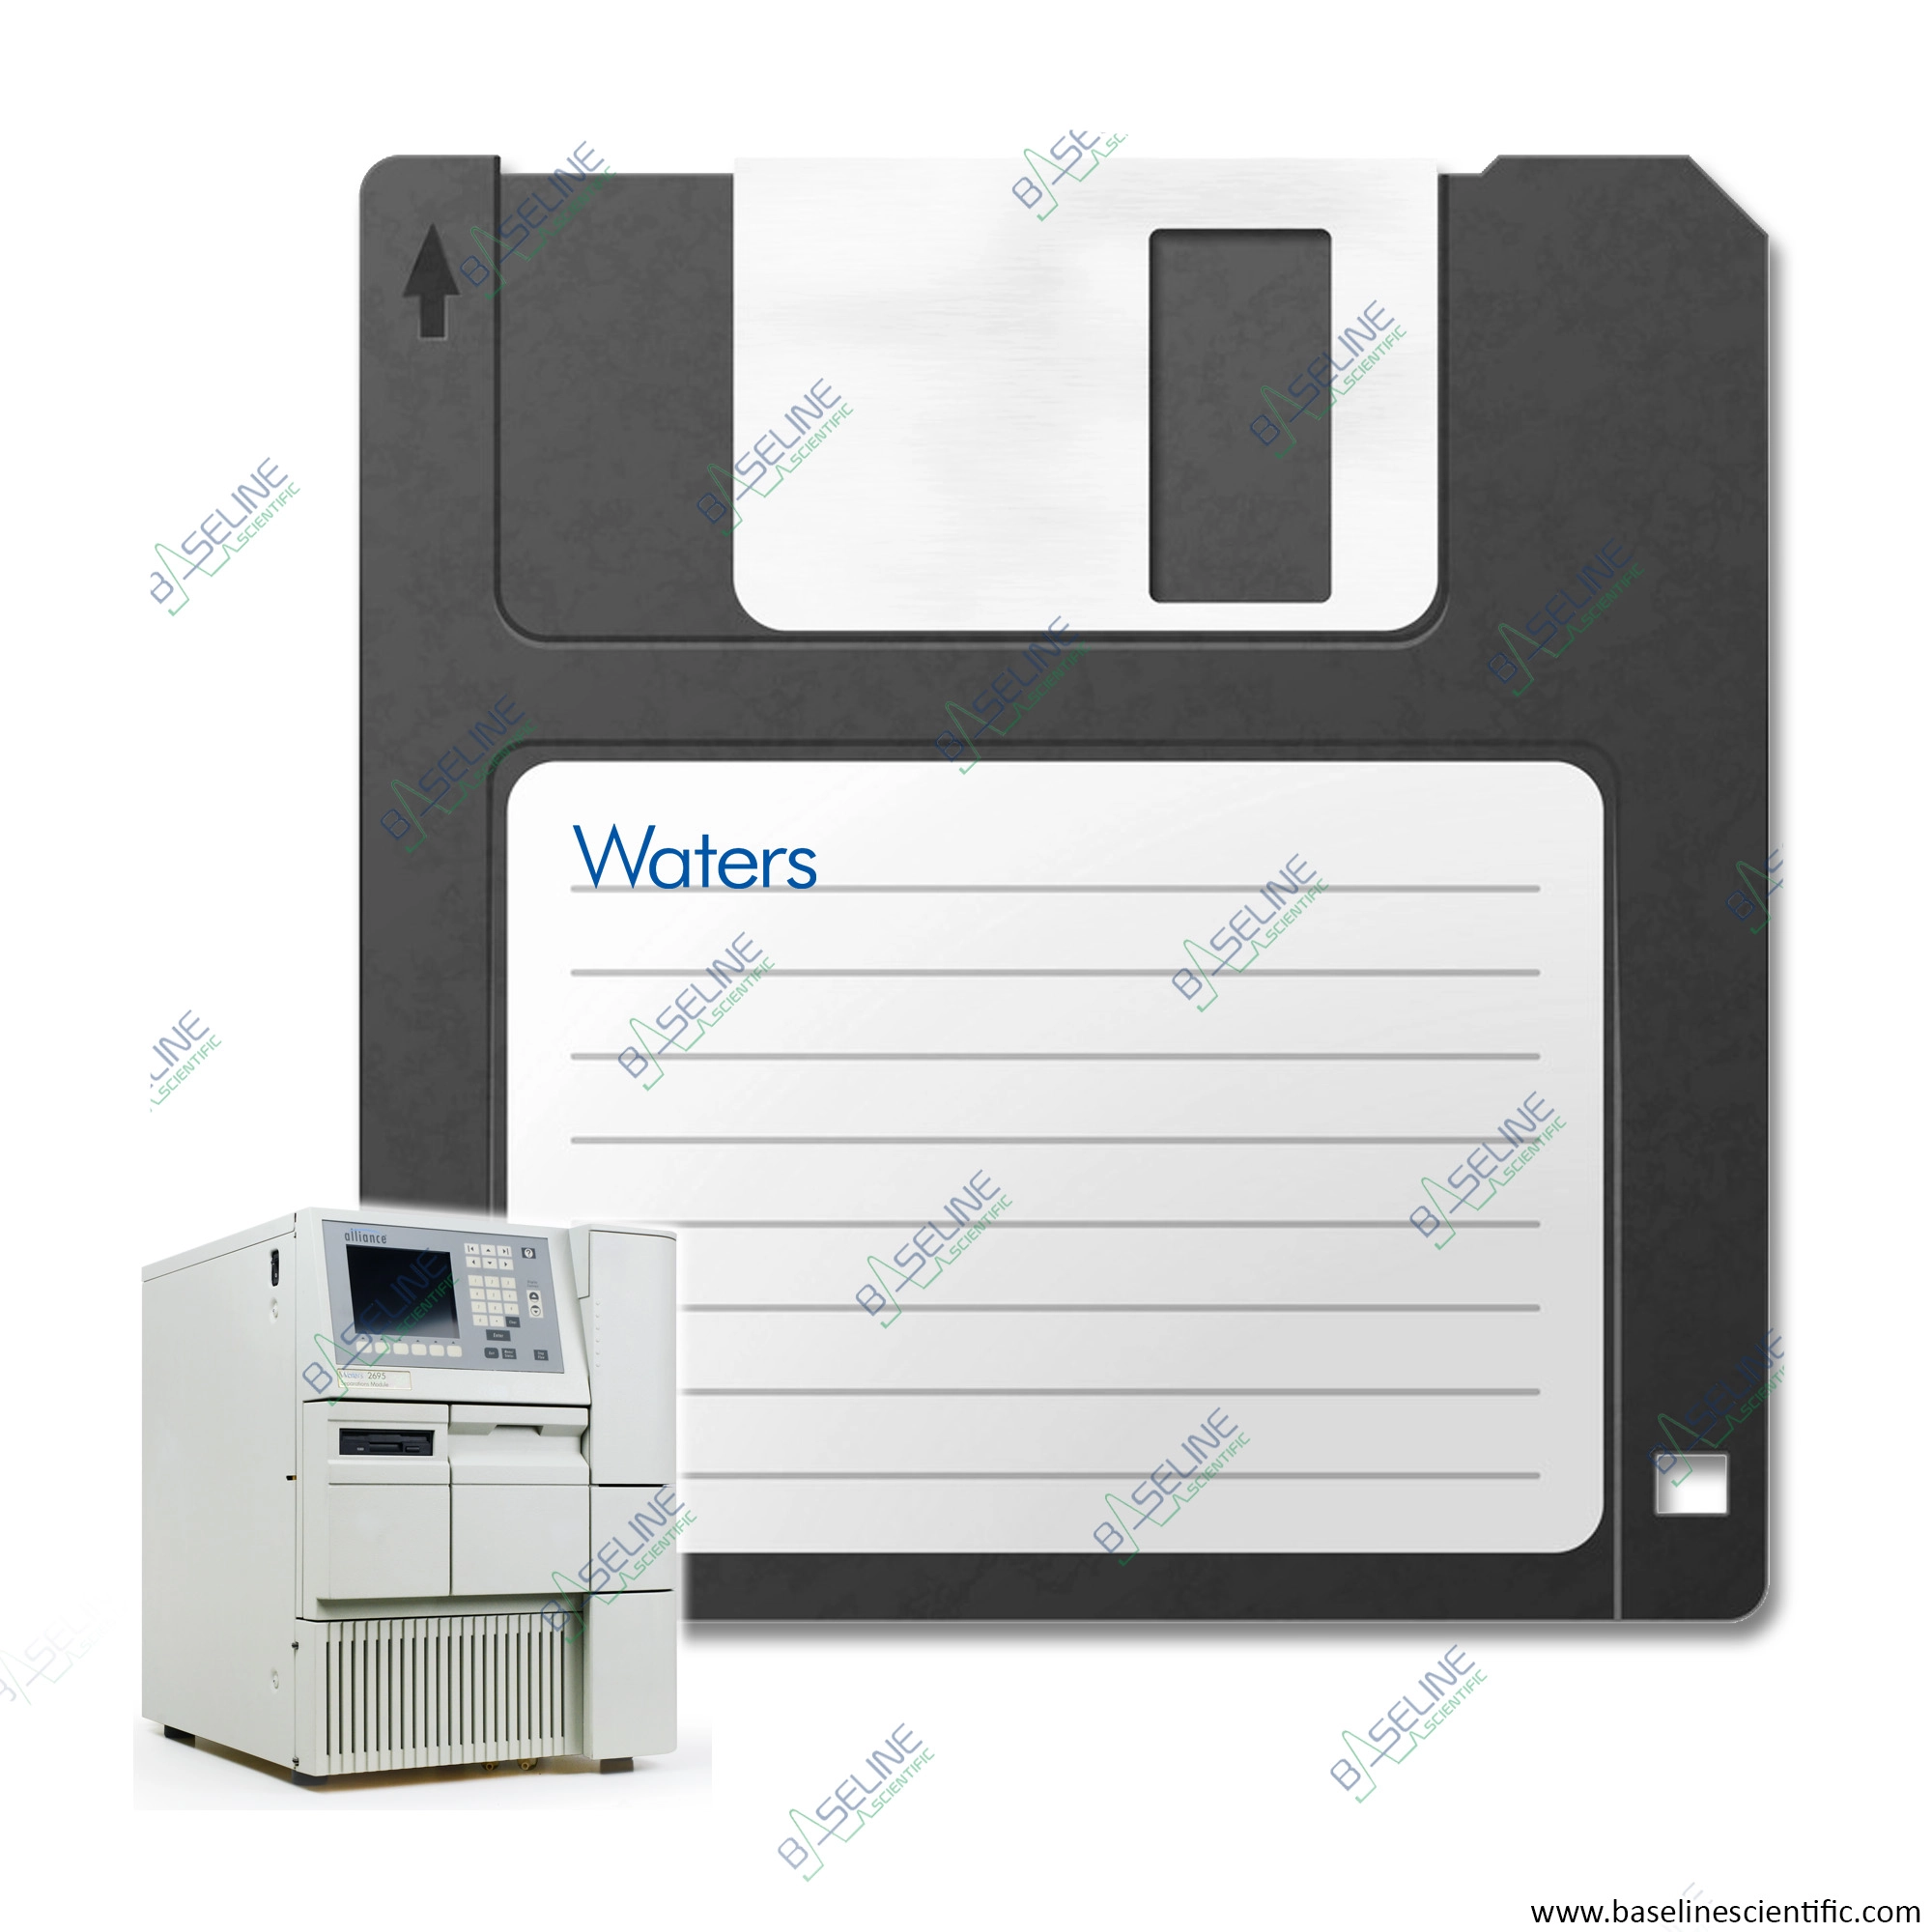 Waters 2695 2690 Firmware Upgrade Kit Floppy Disk Version 2.04 P/N: 667001656